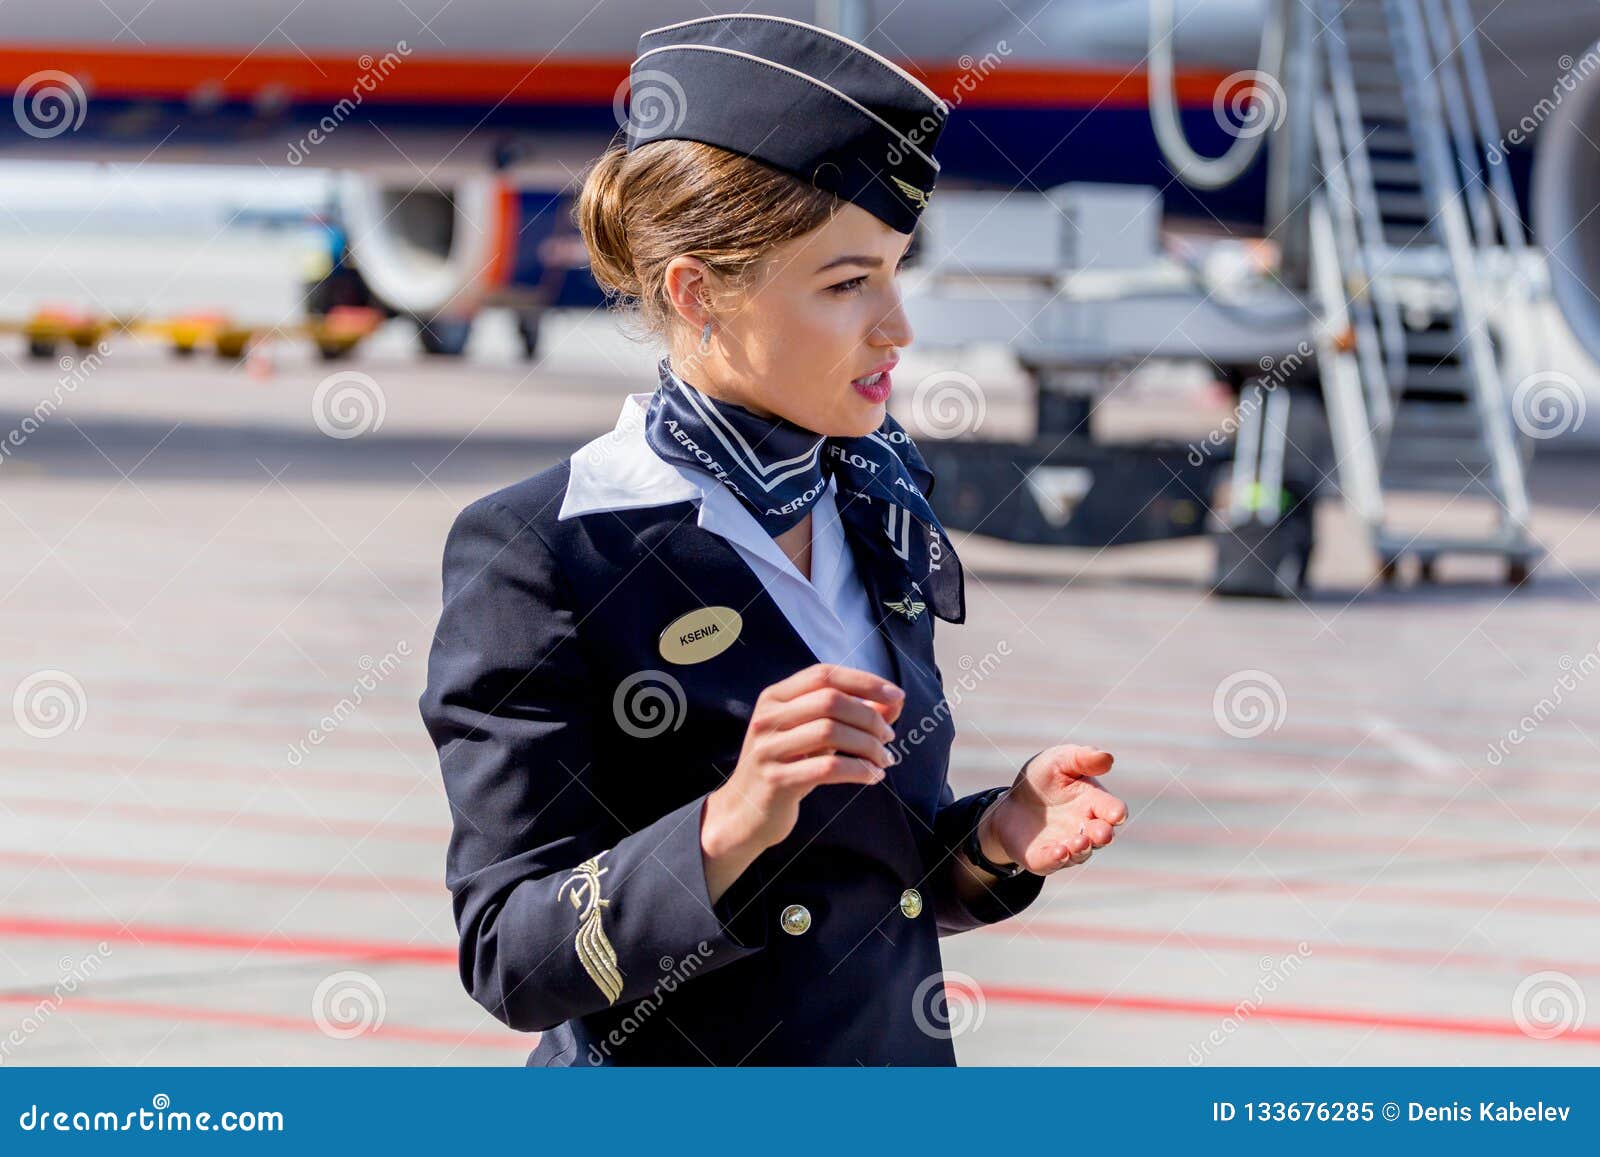 Aeroflot Stewardess Official Wallpaper ~ World stewardess 